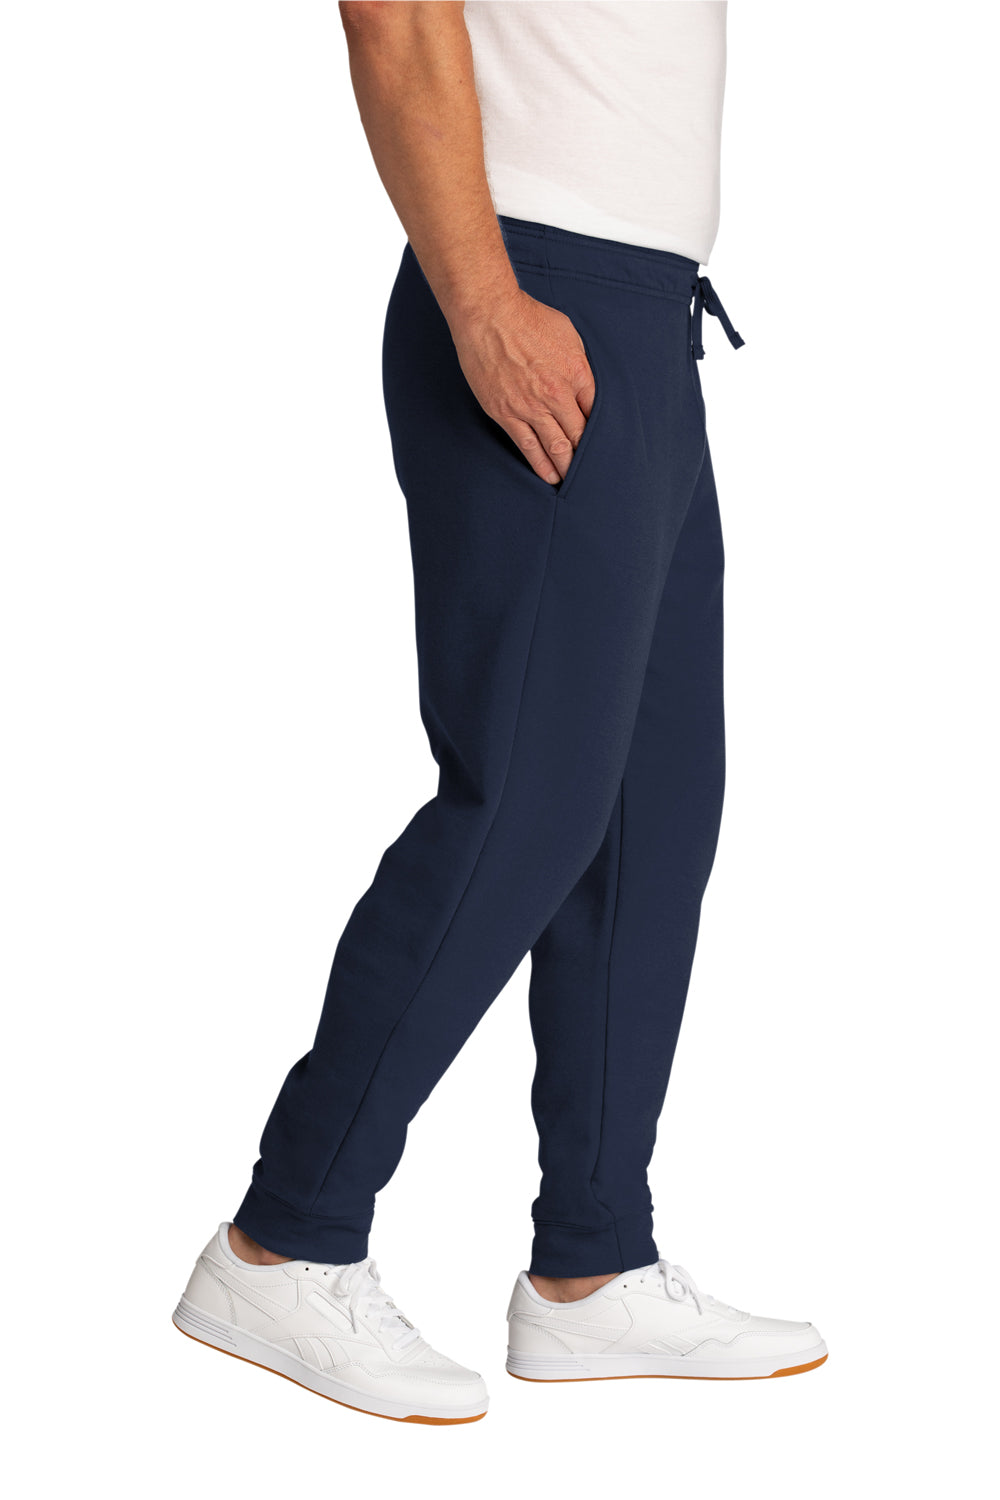 Port & Company PC78J Core Fleece Jogger Sweatpants w/ Pockets Navy Blue Side